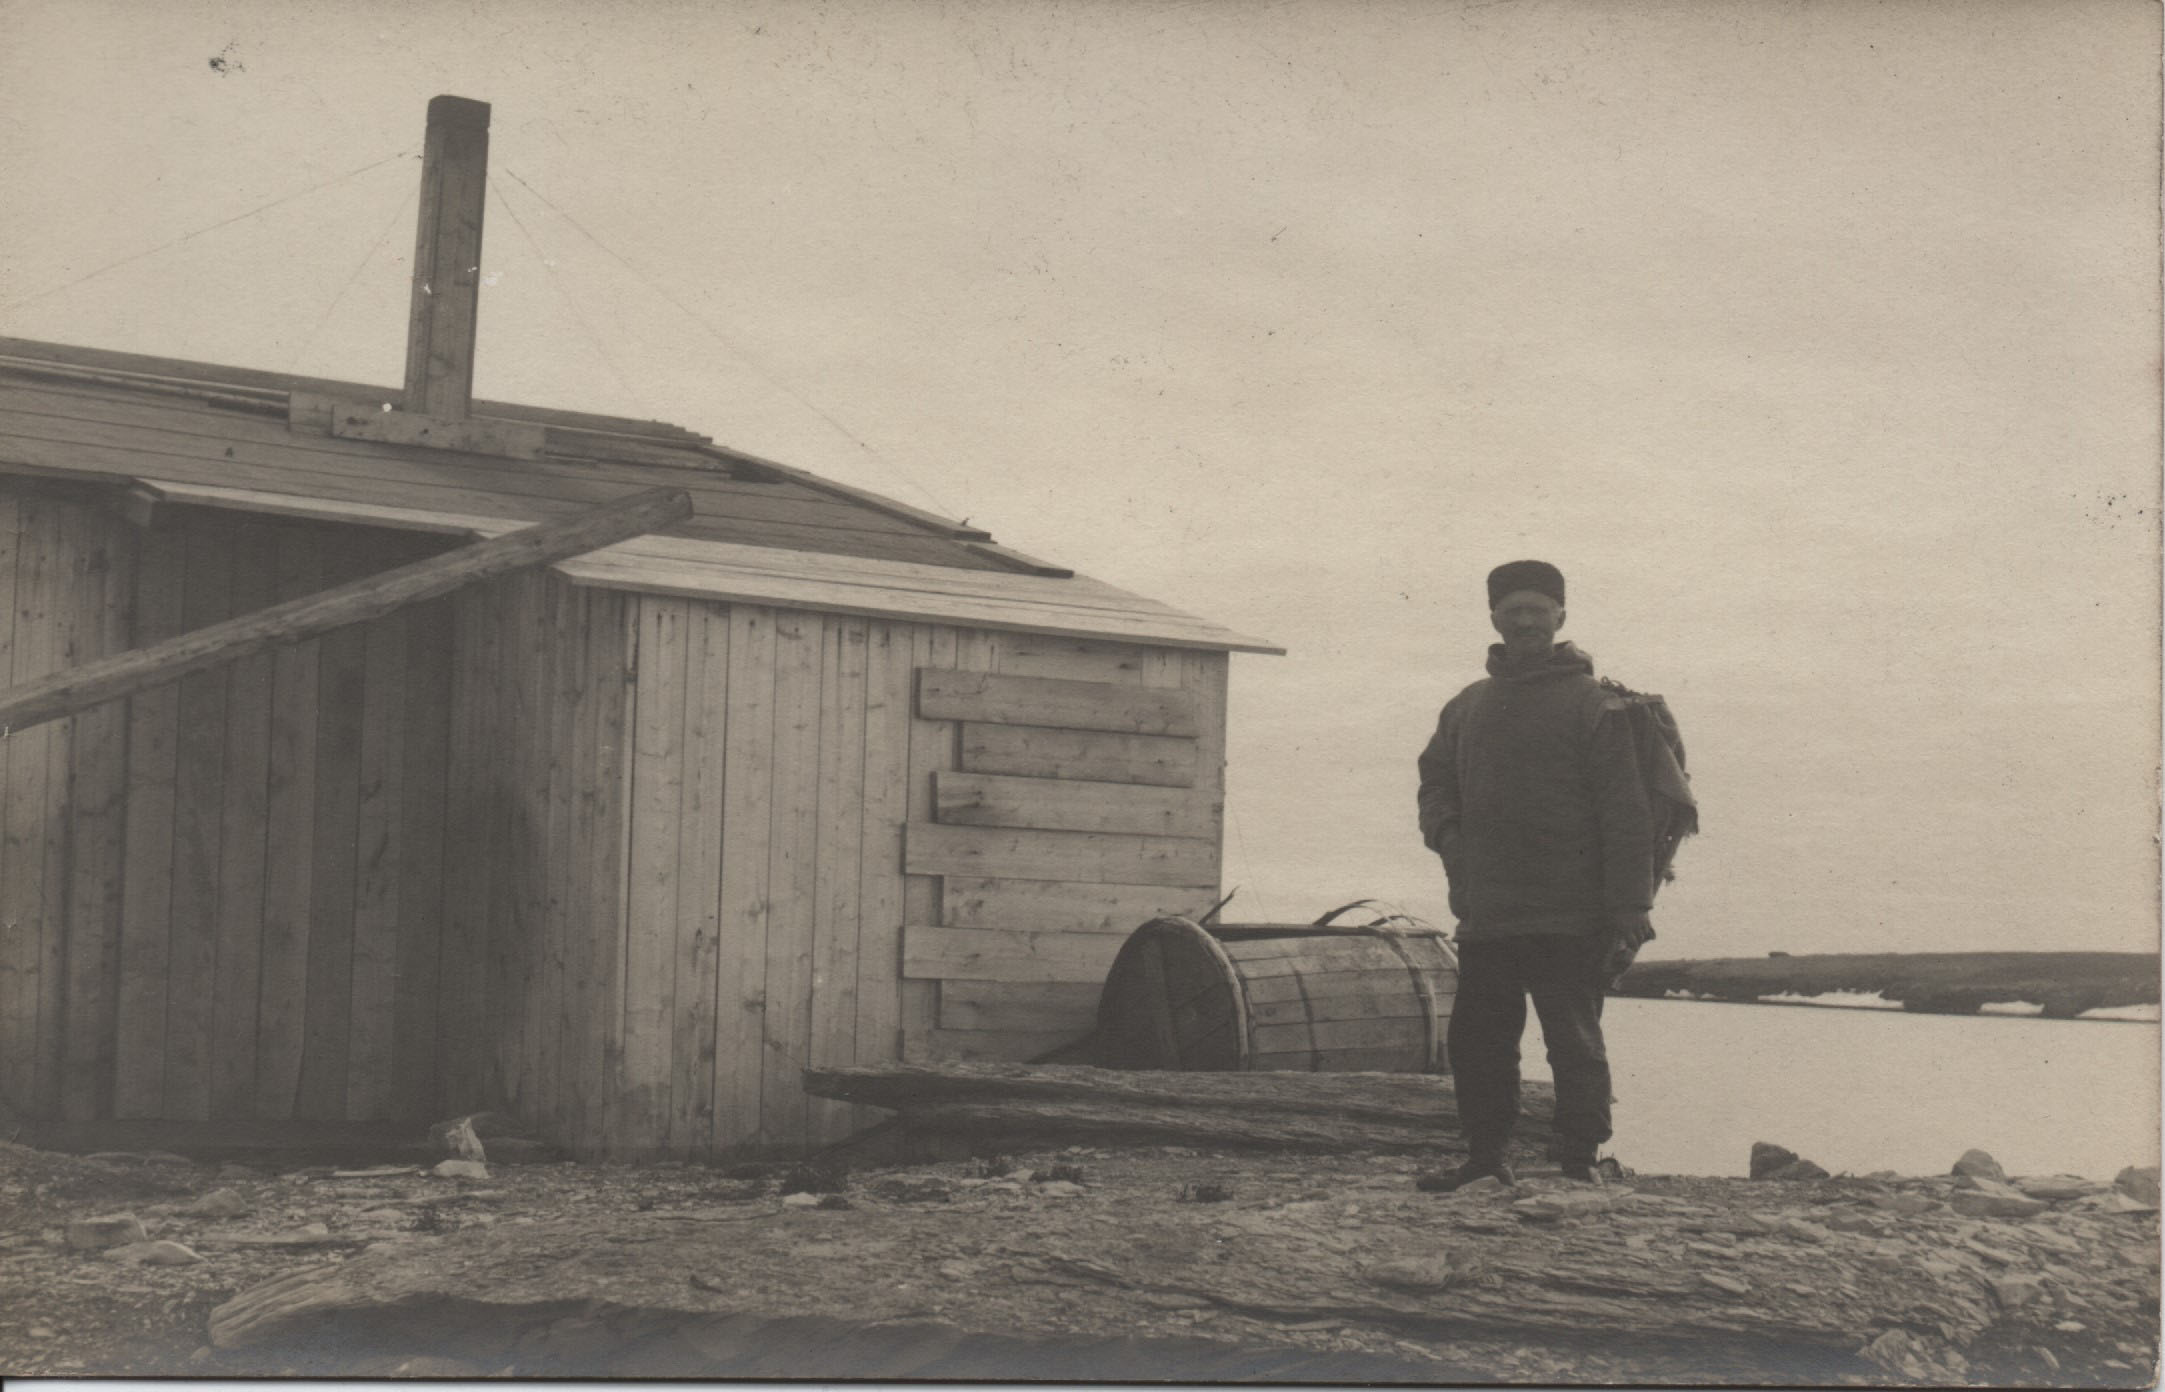 Postcard Explorer Hjalmar Johansen Expedition 1908